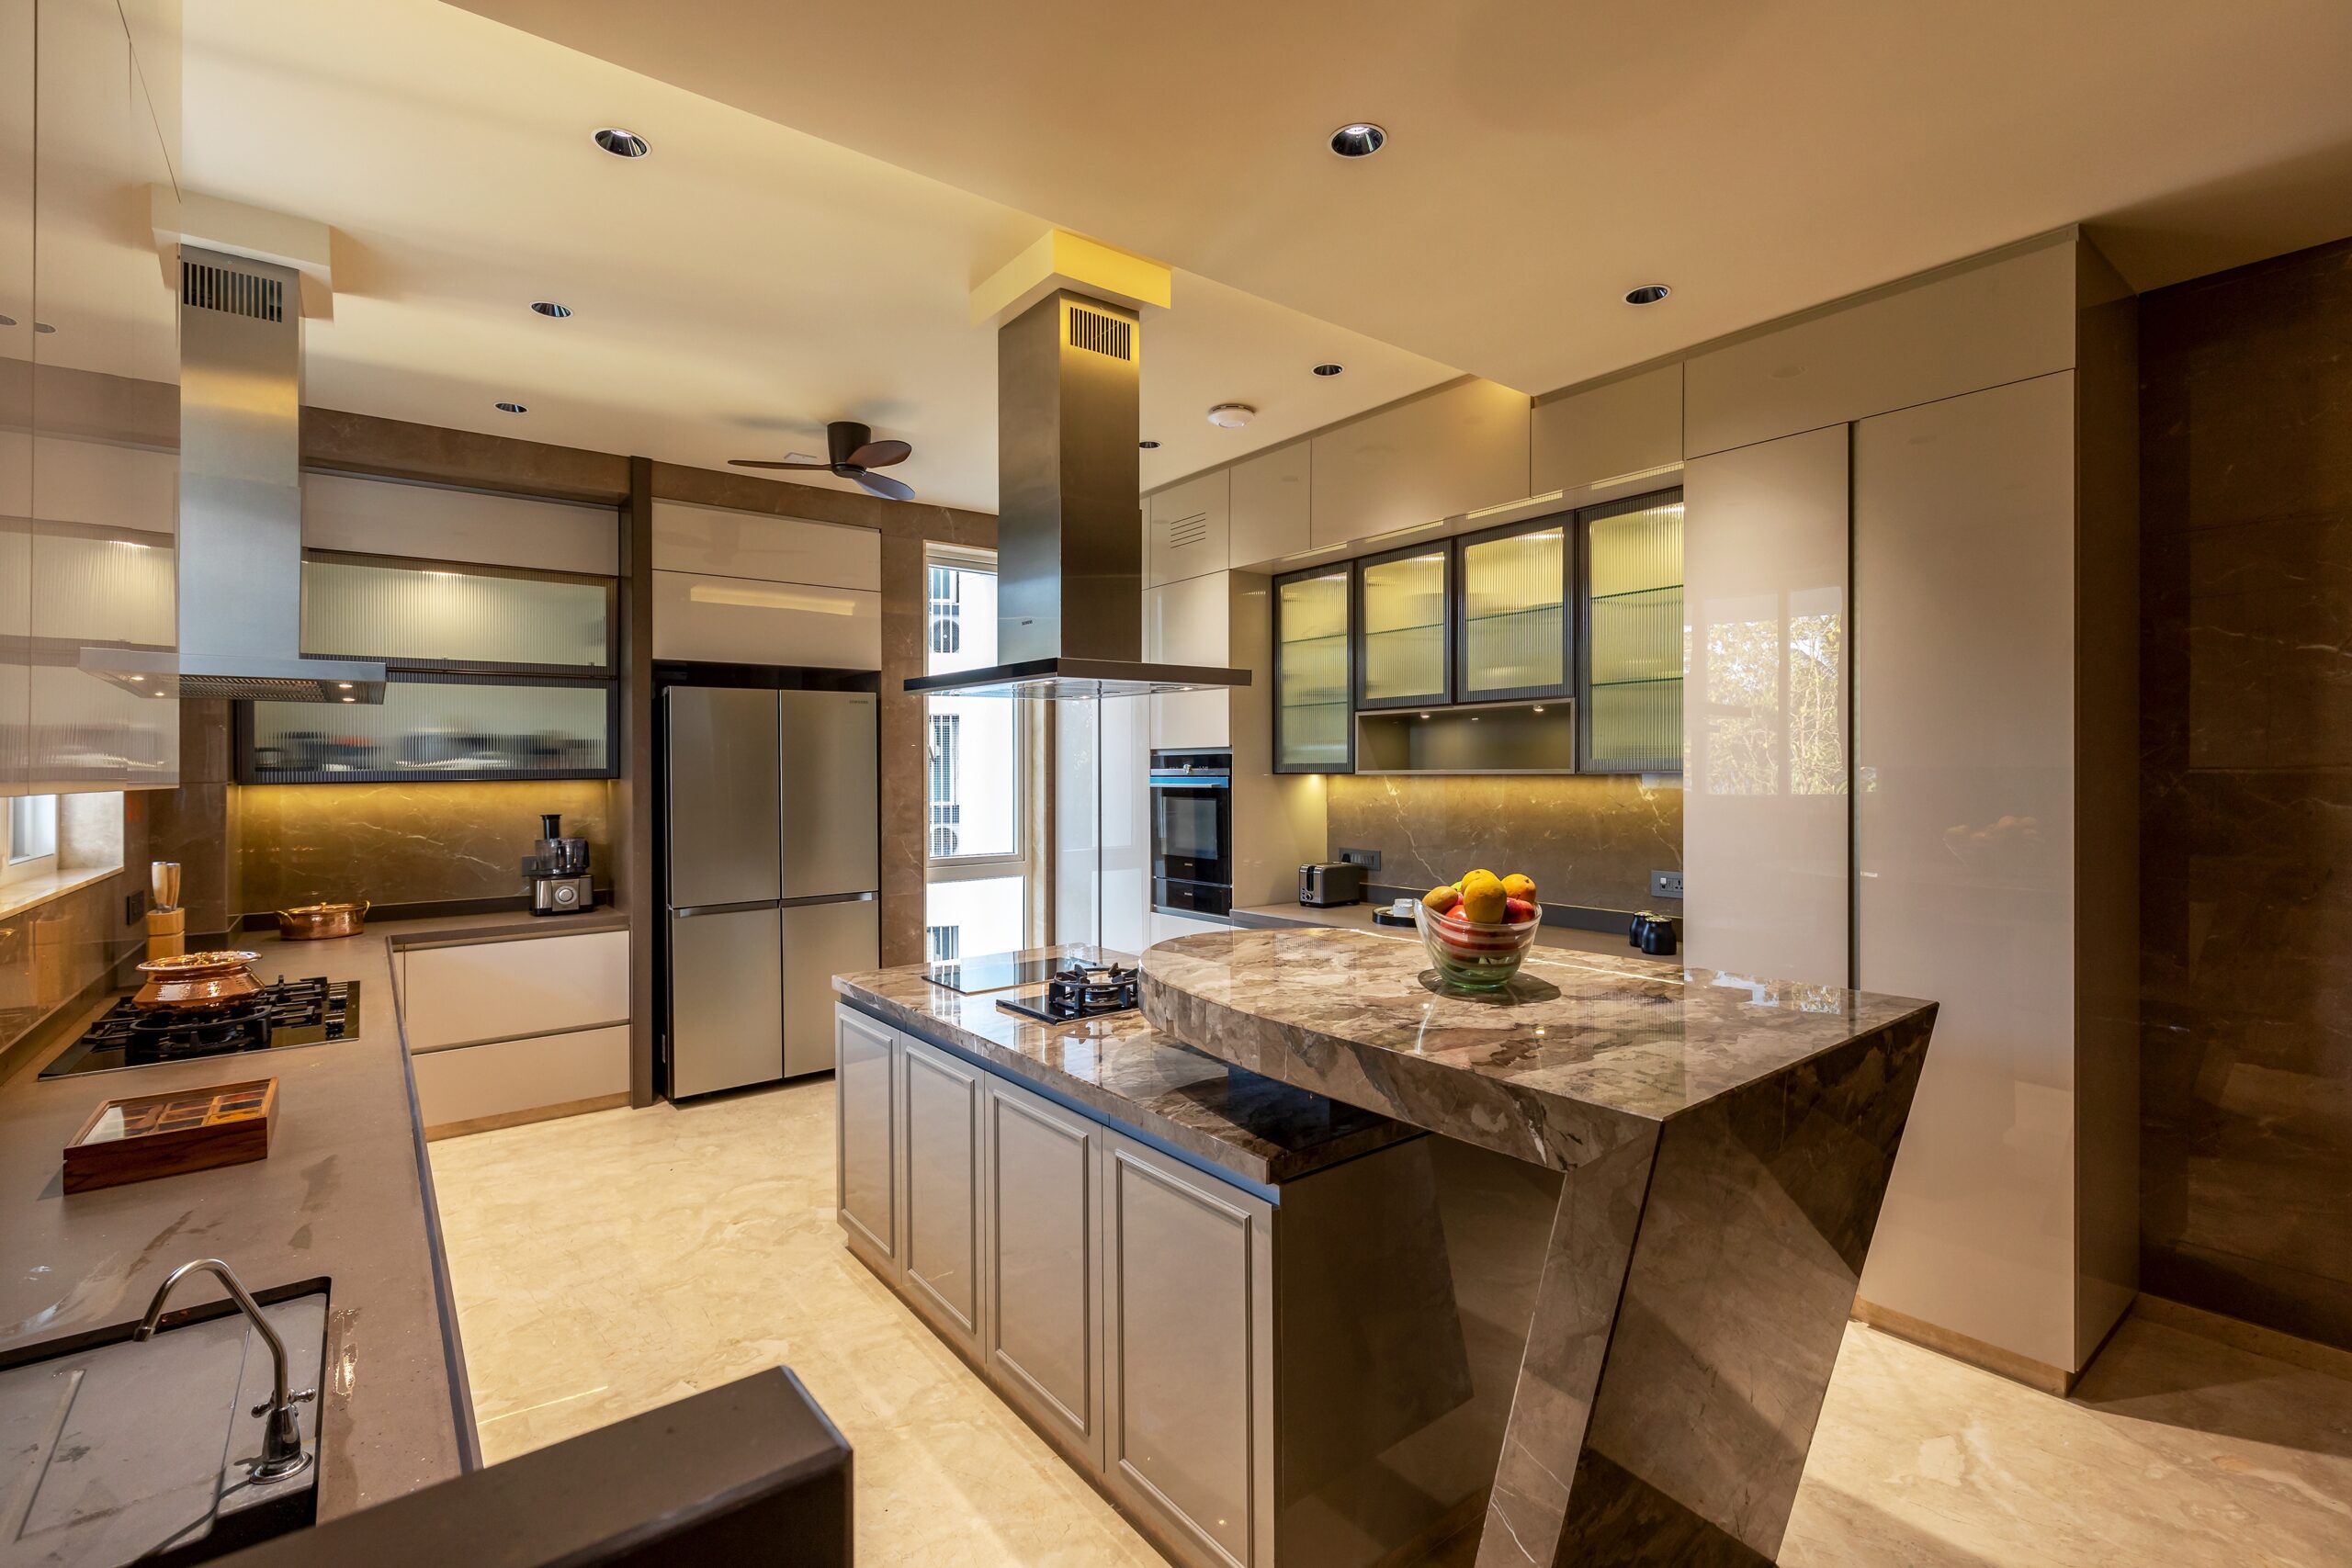 modular kitchen furniture design